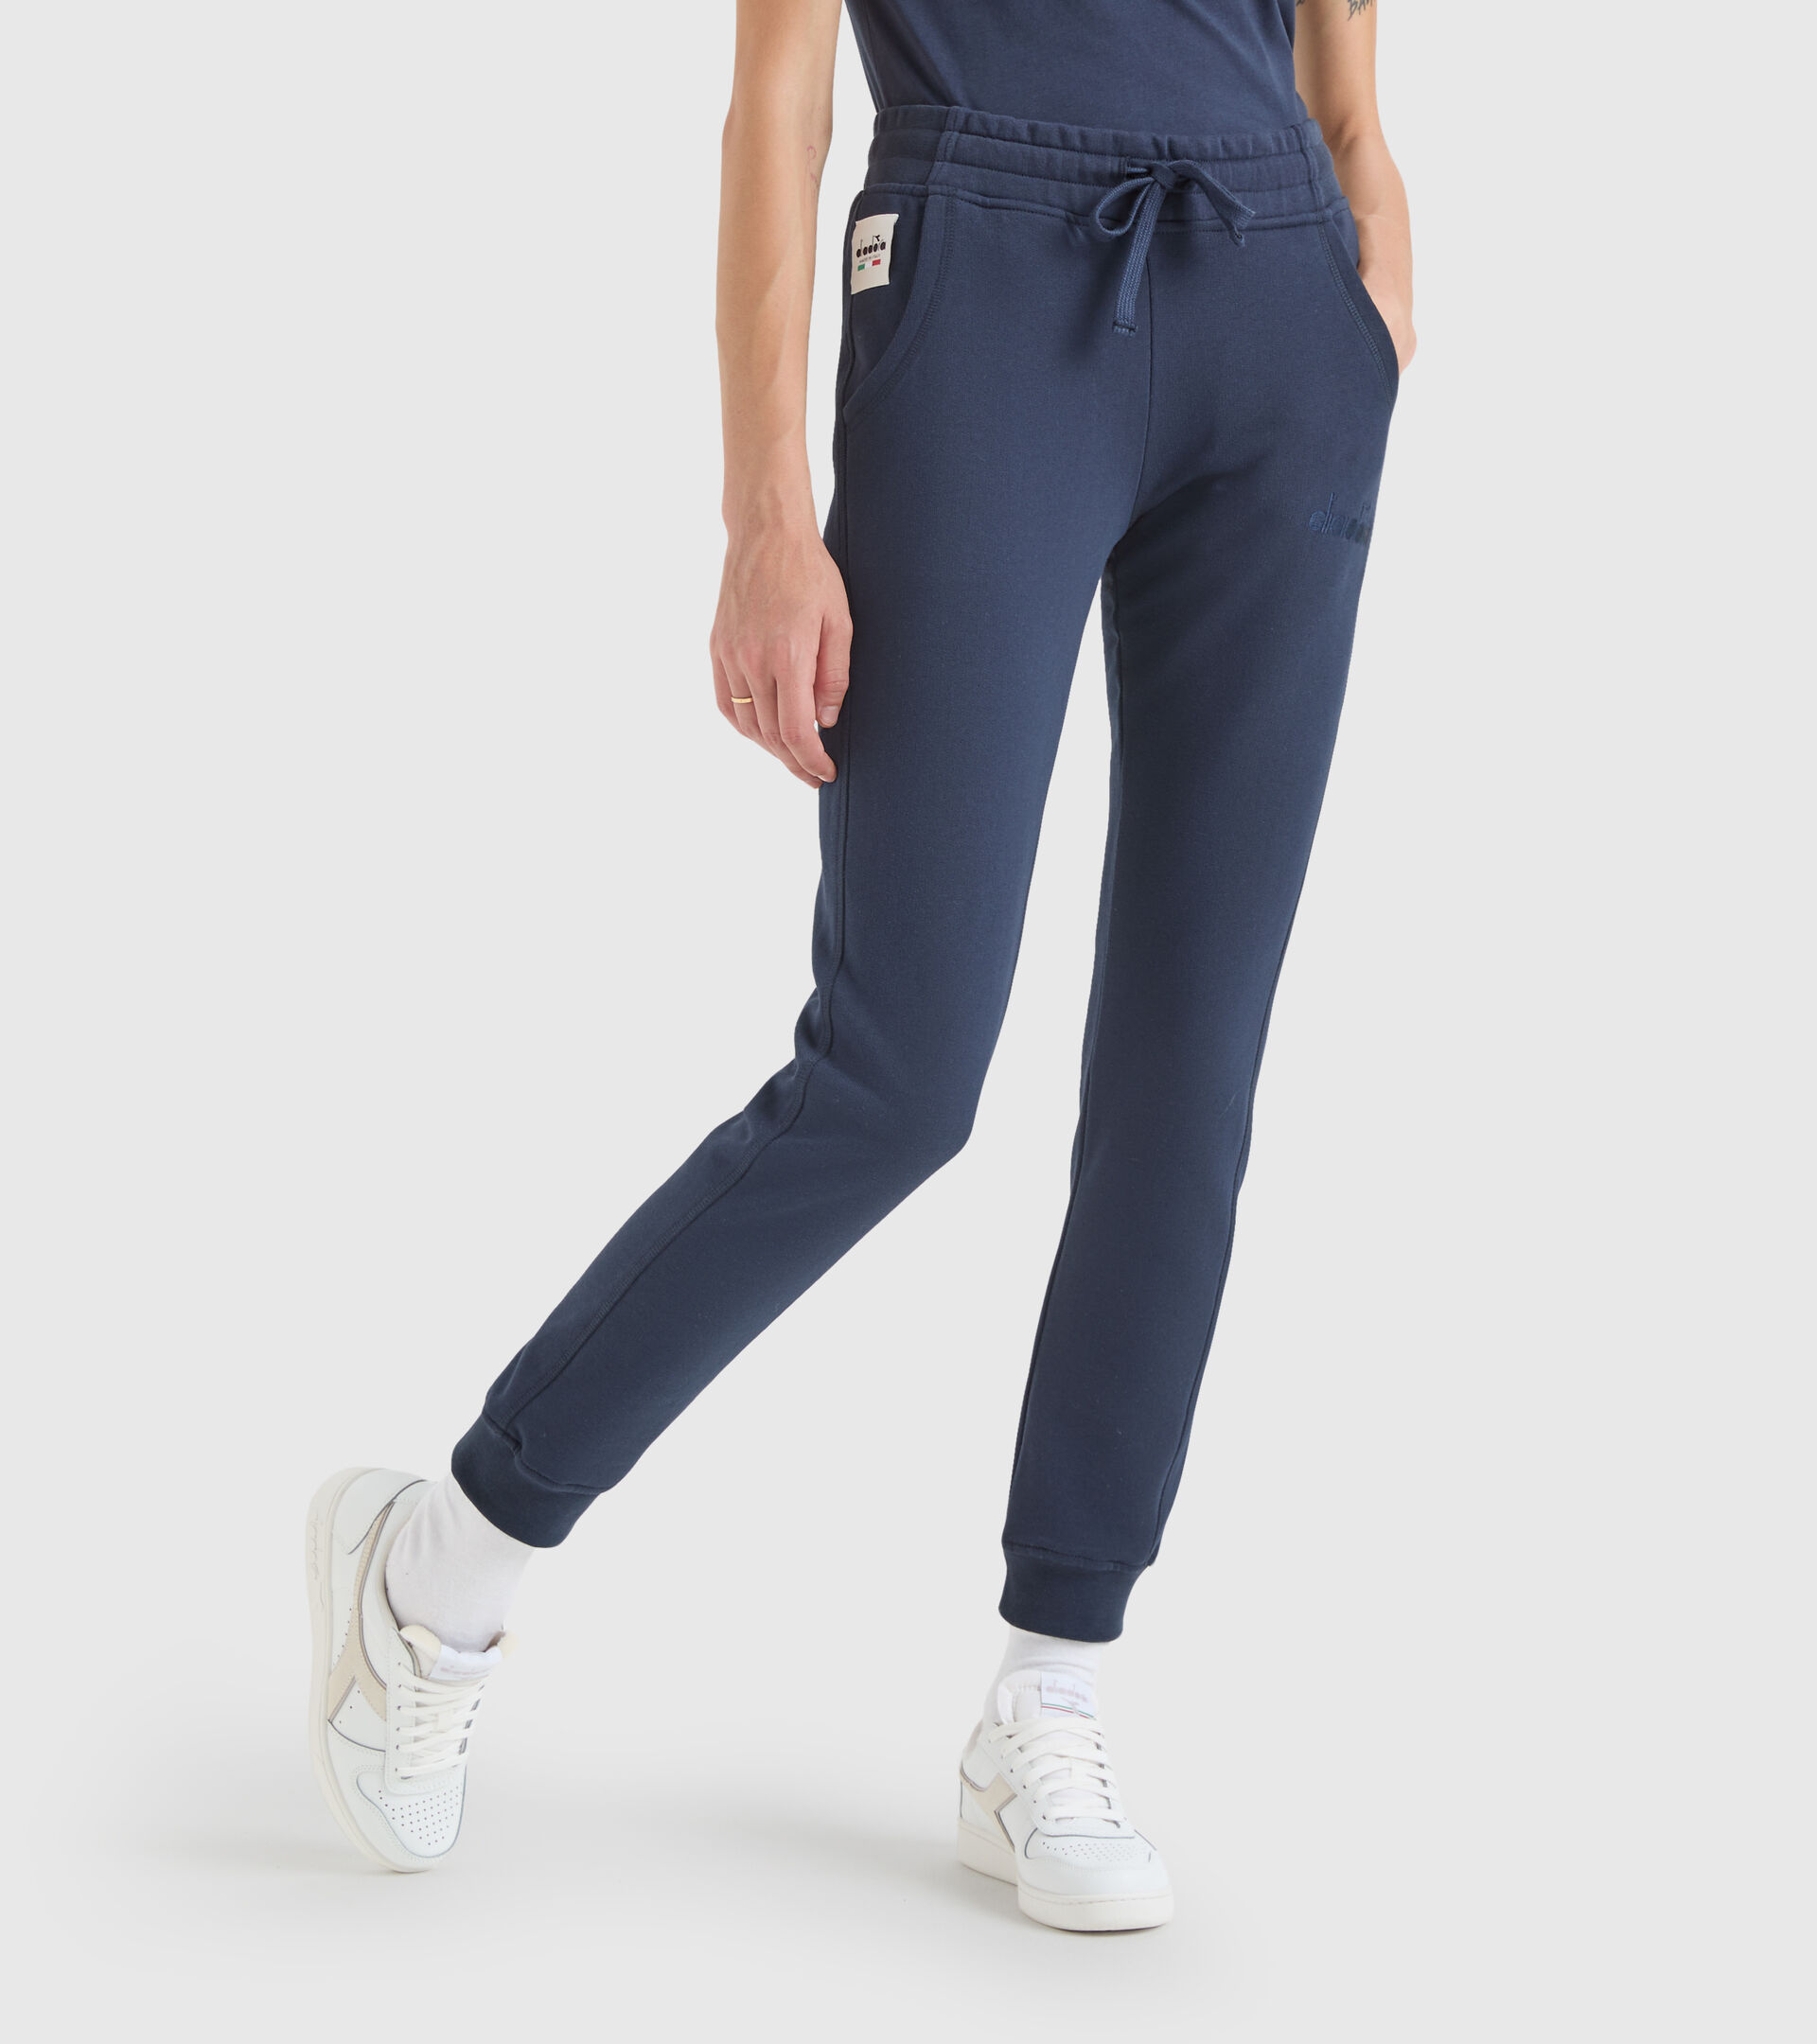 L. JOGGER PANT MII Pantalón deportivo de algodón - Mujer - Tienda